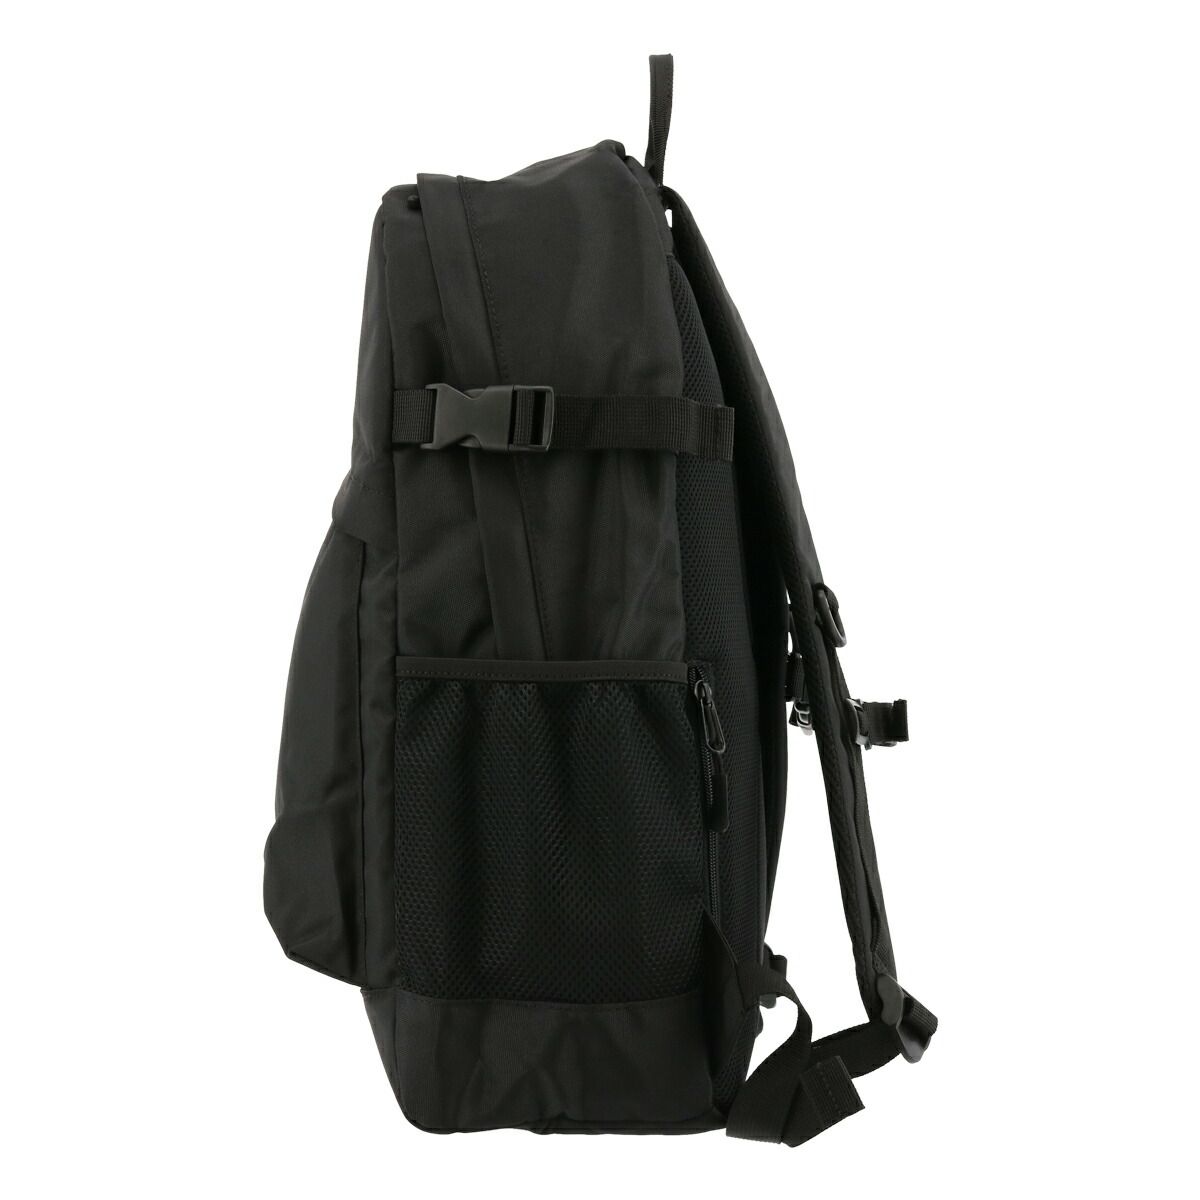  Kangol 1530 Backpack 